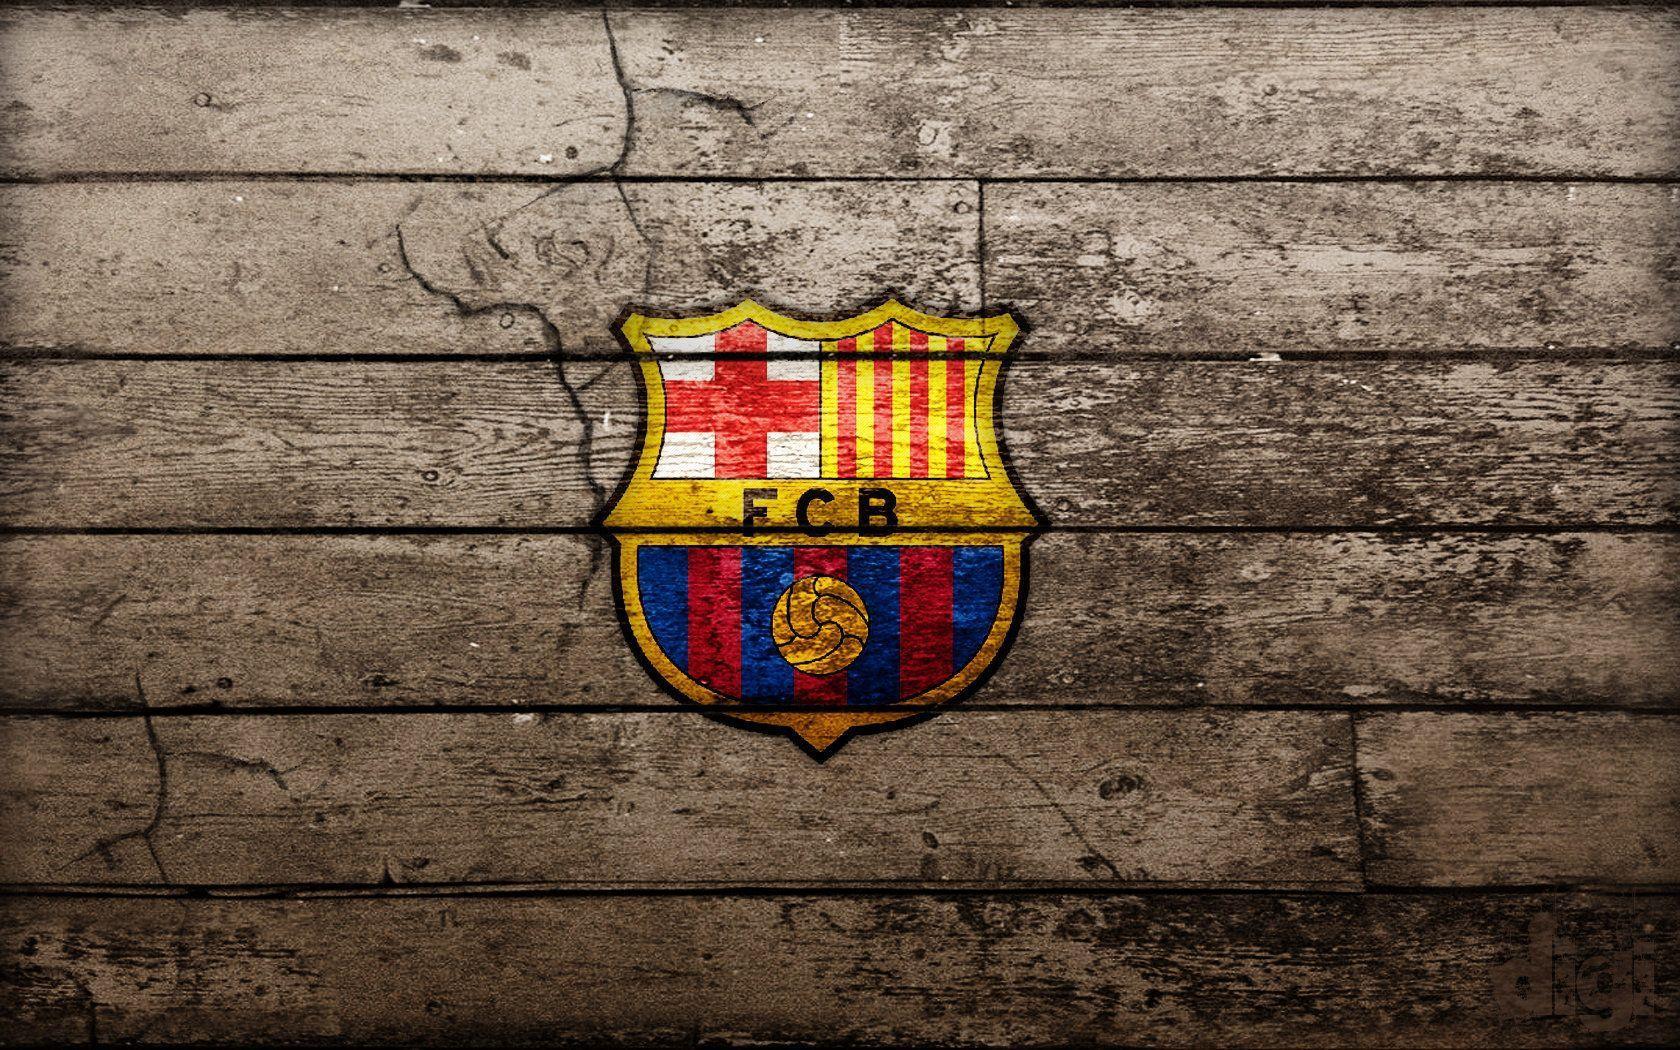 FC Barcelona Desktop Wallpapers ~ Toptenpack